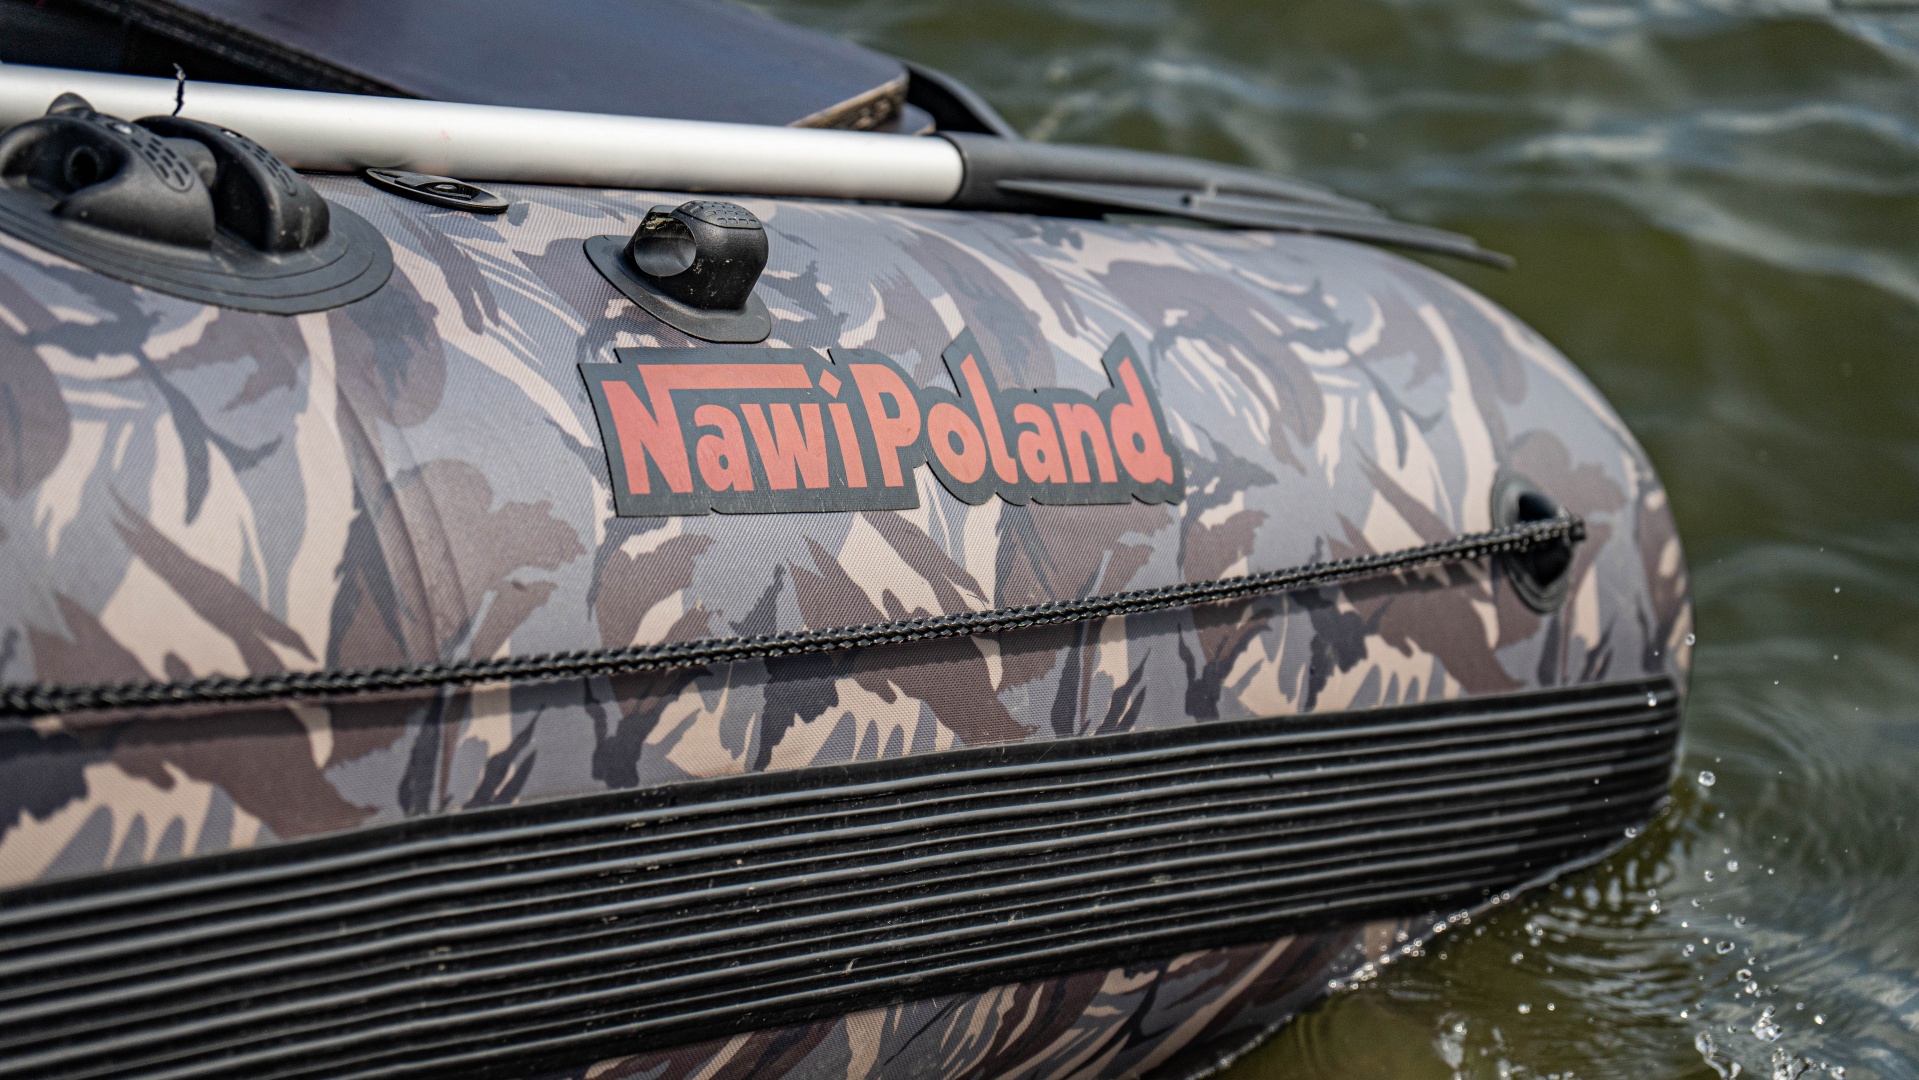 NawiPoland CAT 260 Inflatable Boat  - Katamaran